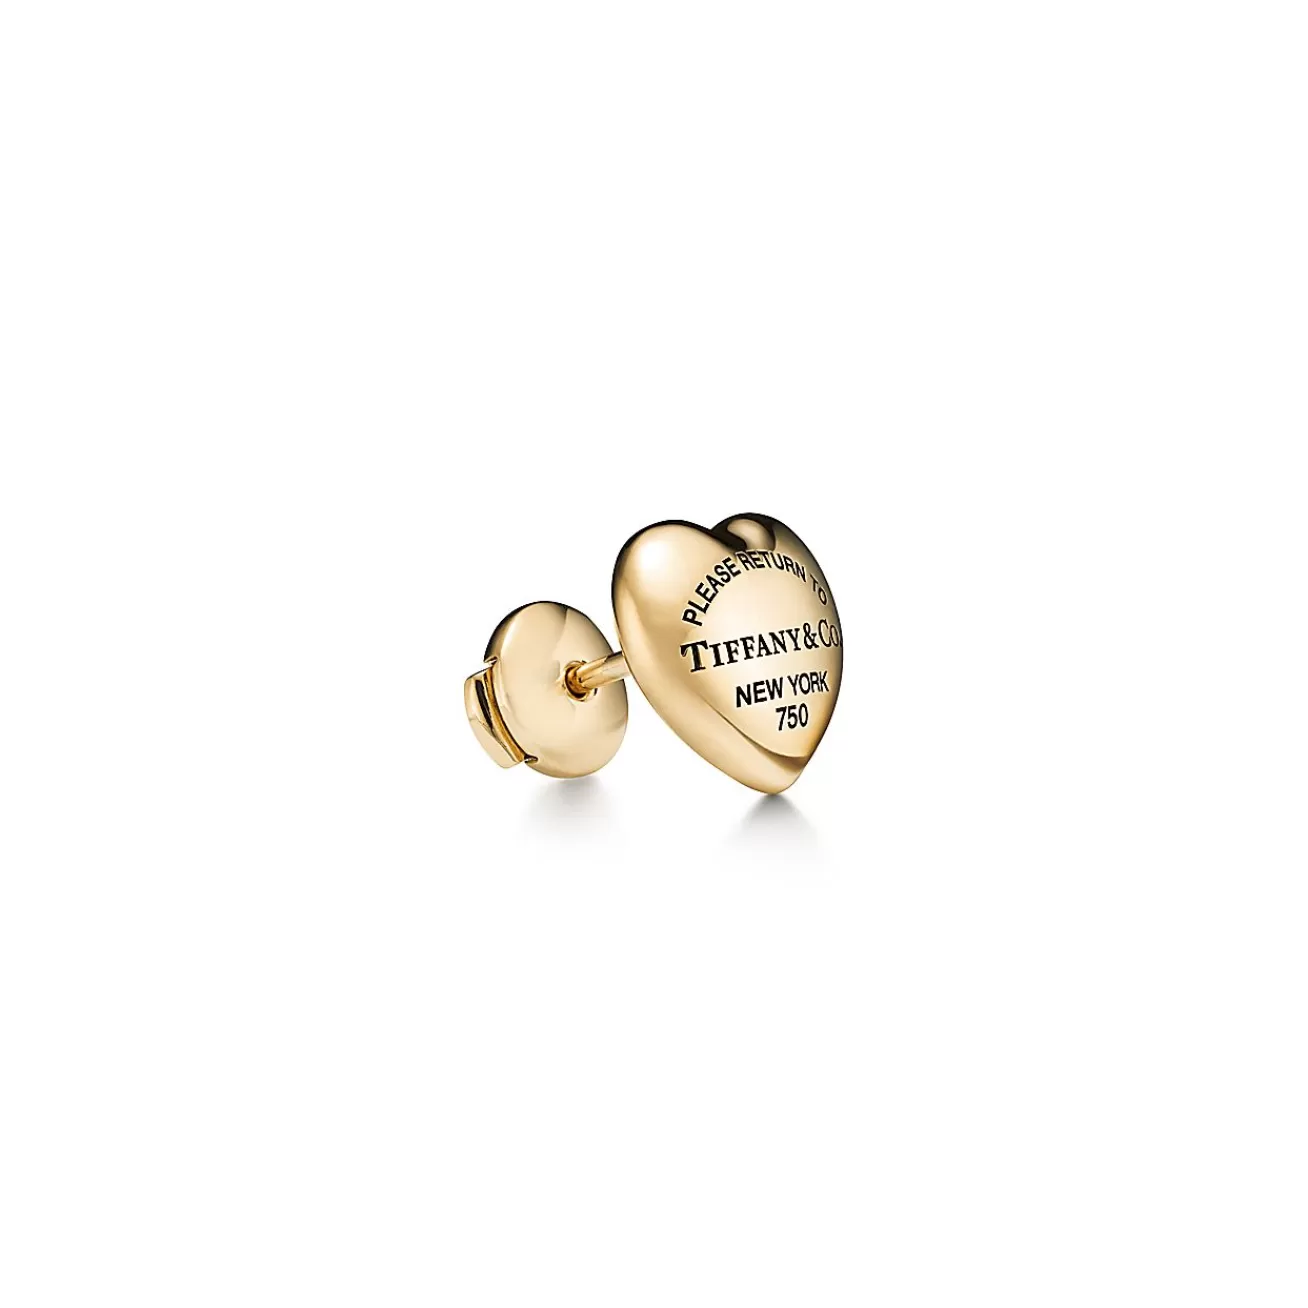 Tiffany & Co. Return to Tiffany® Full Heart Earrings in Yellow Gold | ^ Earrings | Gifts for Her